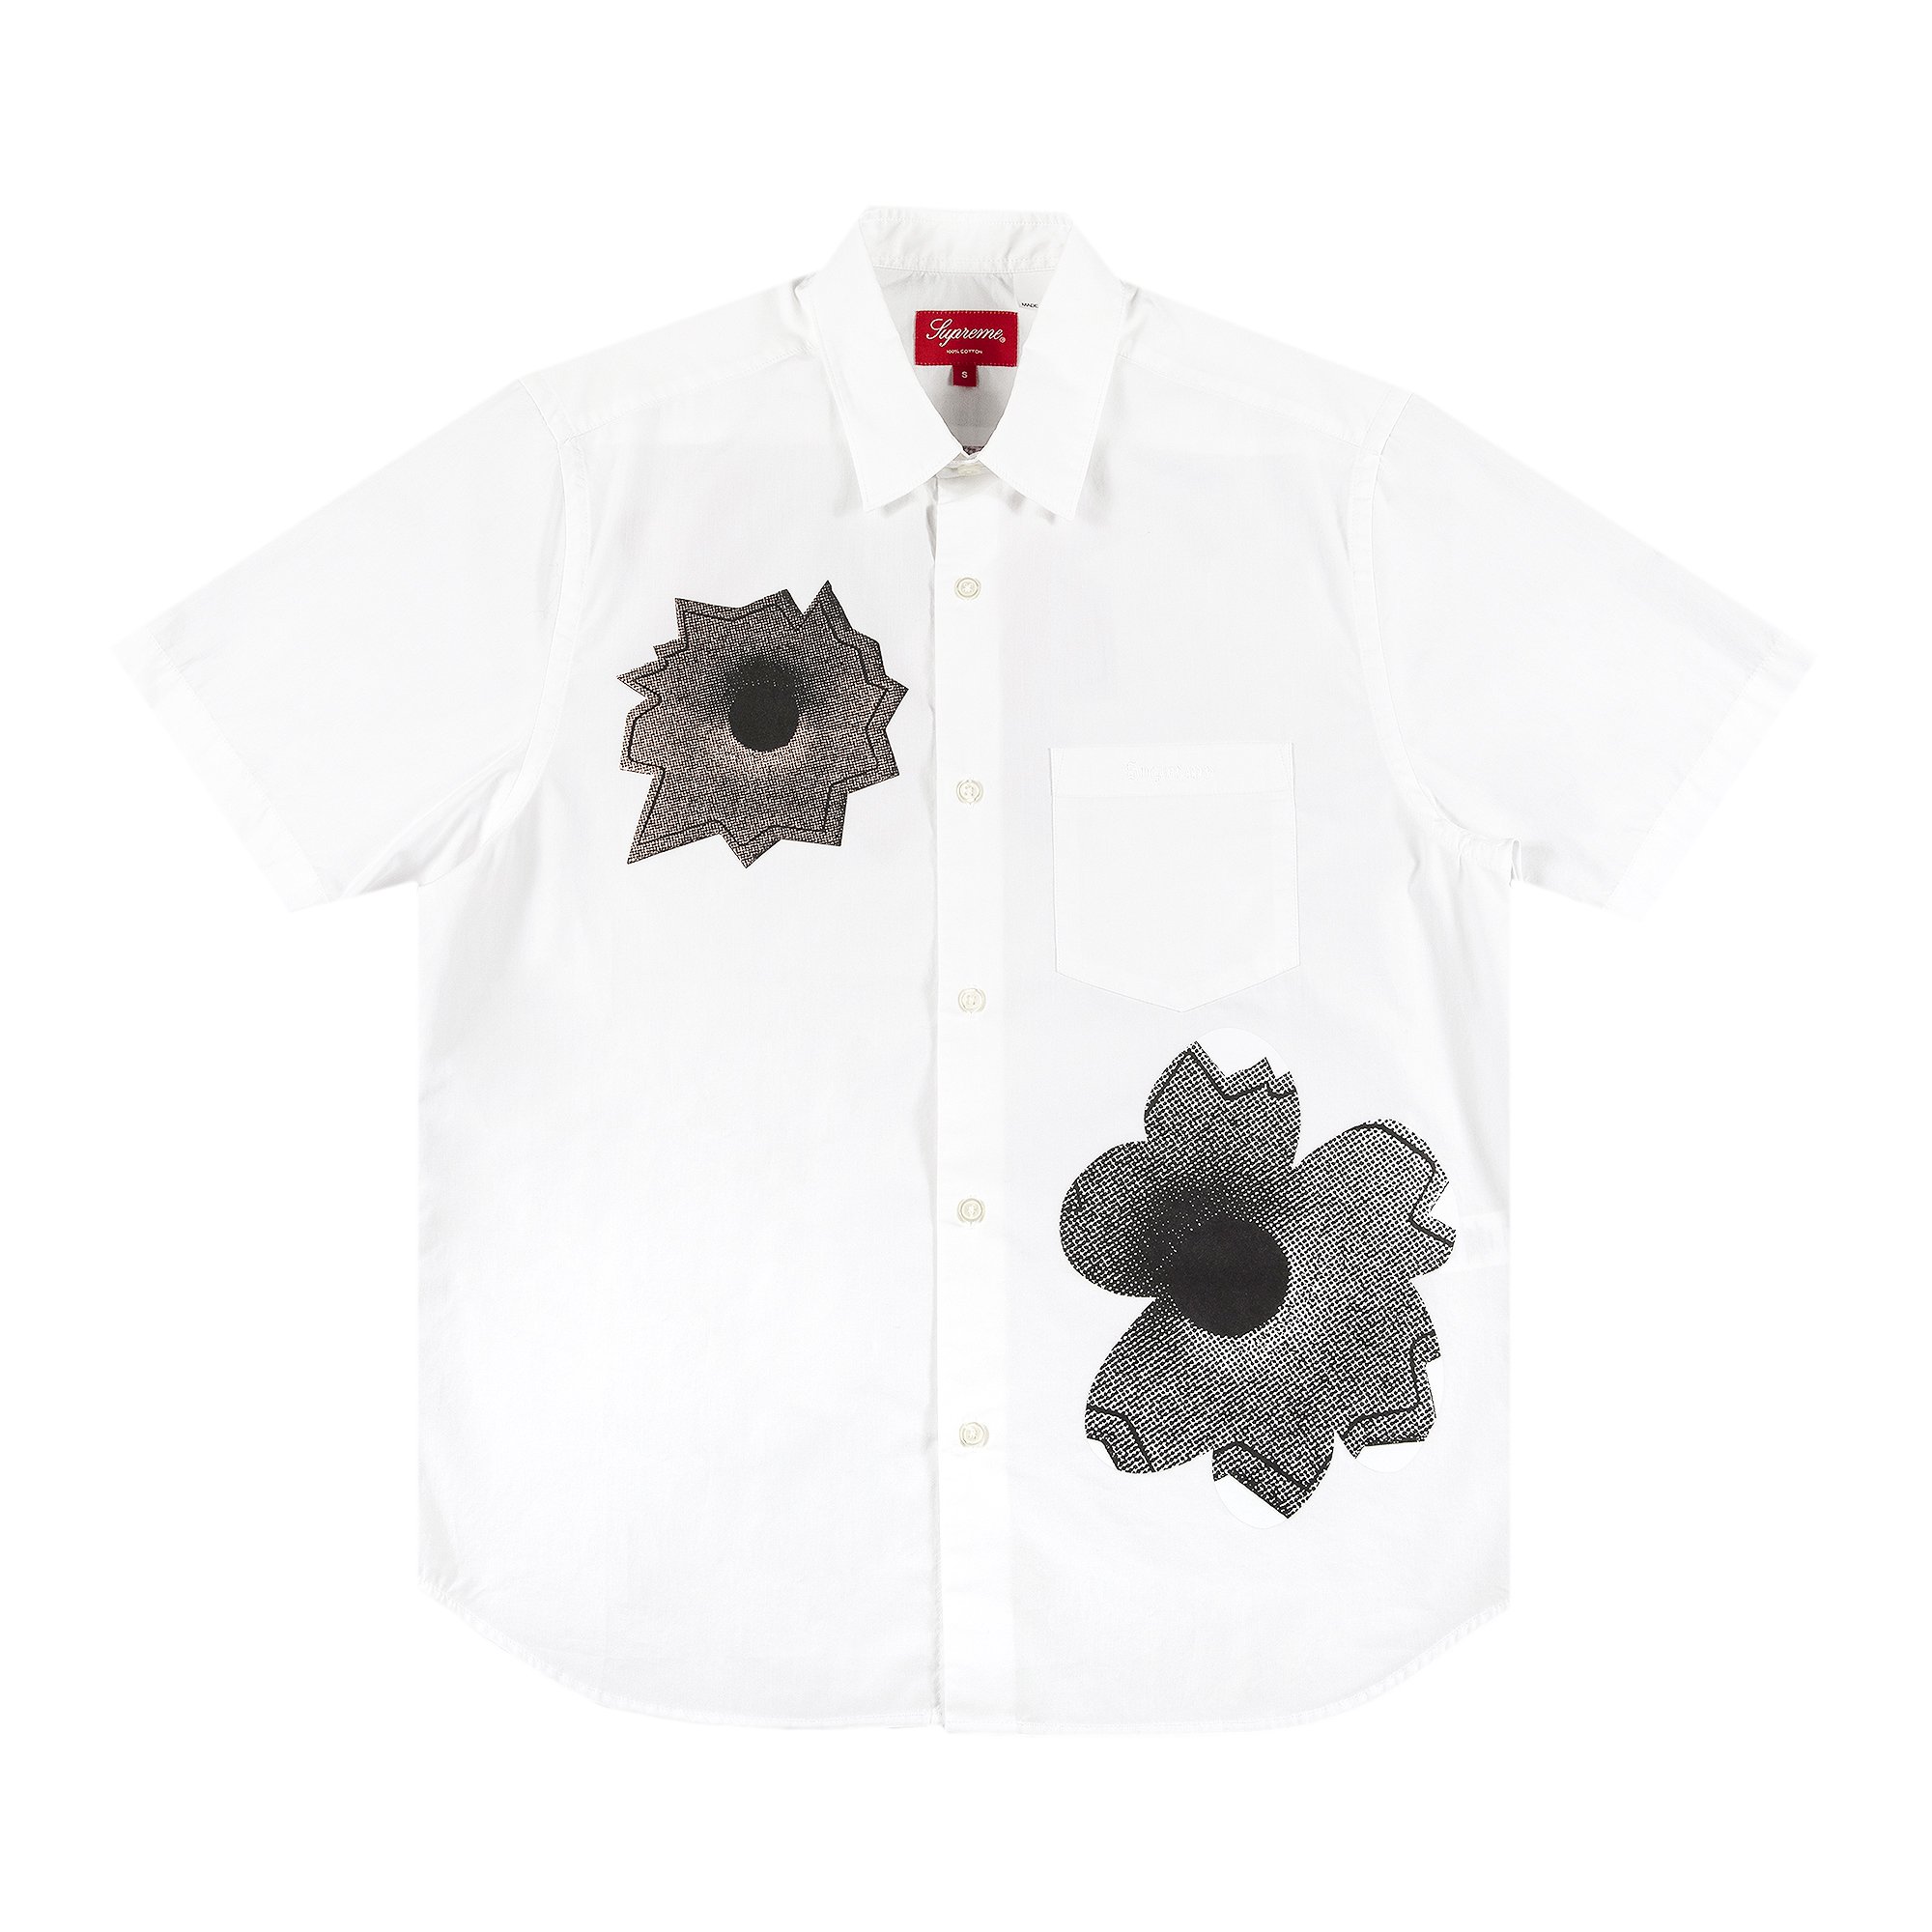 Supreme x Nate Lowman Short-Sleeve Shirt 'White'